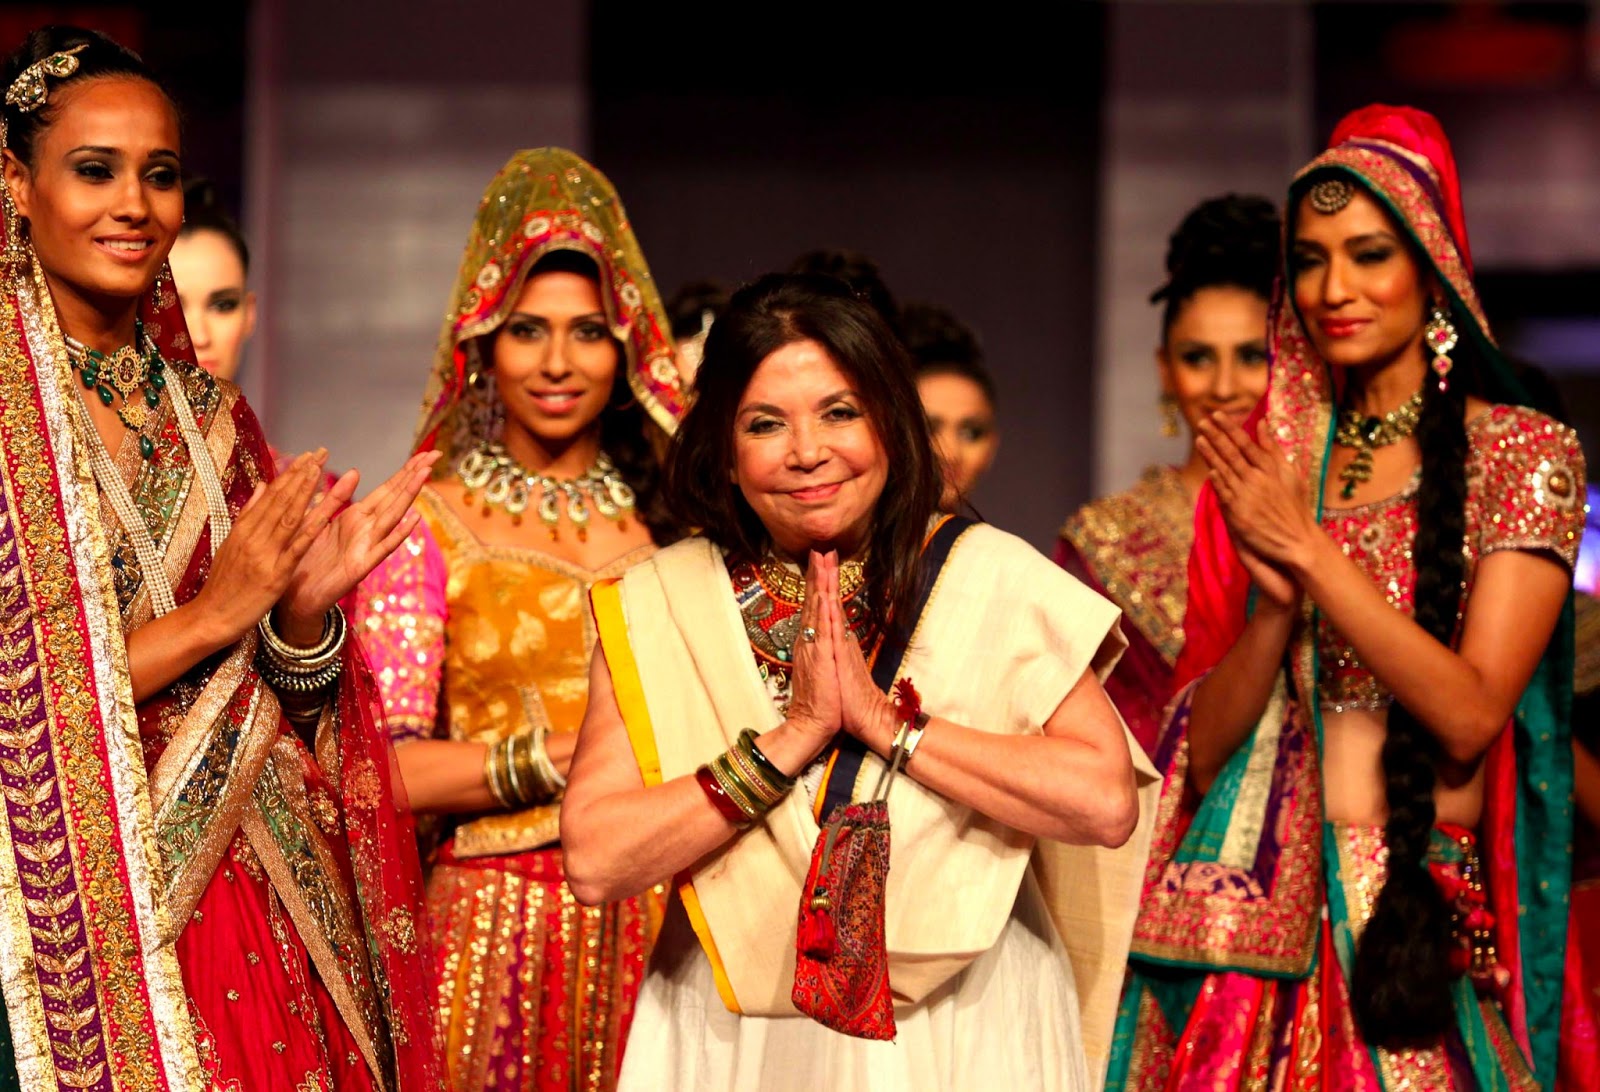 2nd day of Rajasthan Fashion Week at Fairmont, Jaipur | Mumbai Newsbox